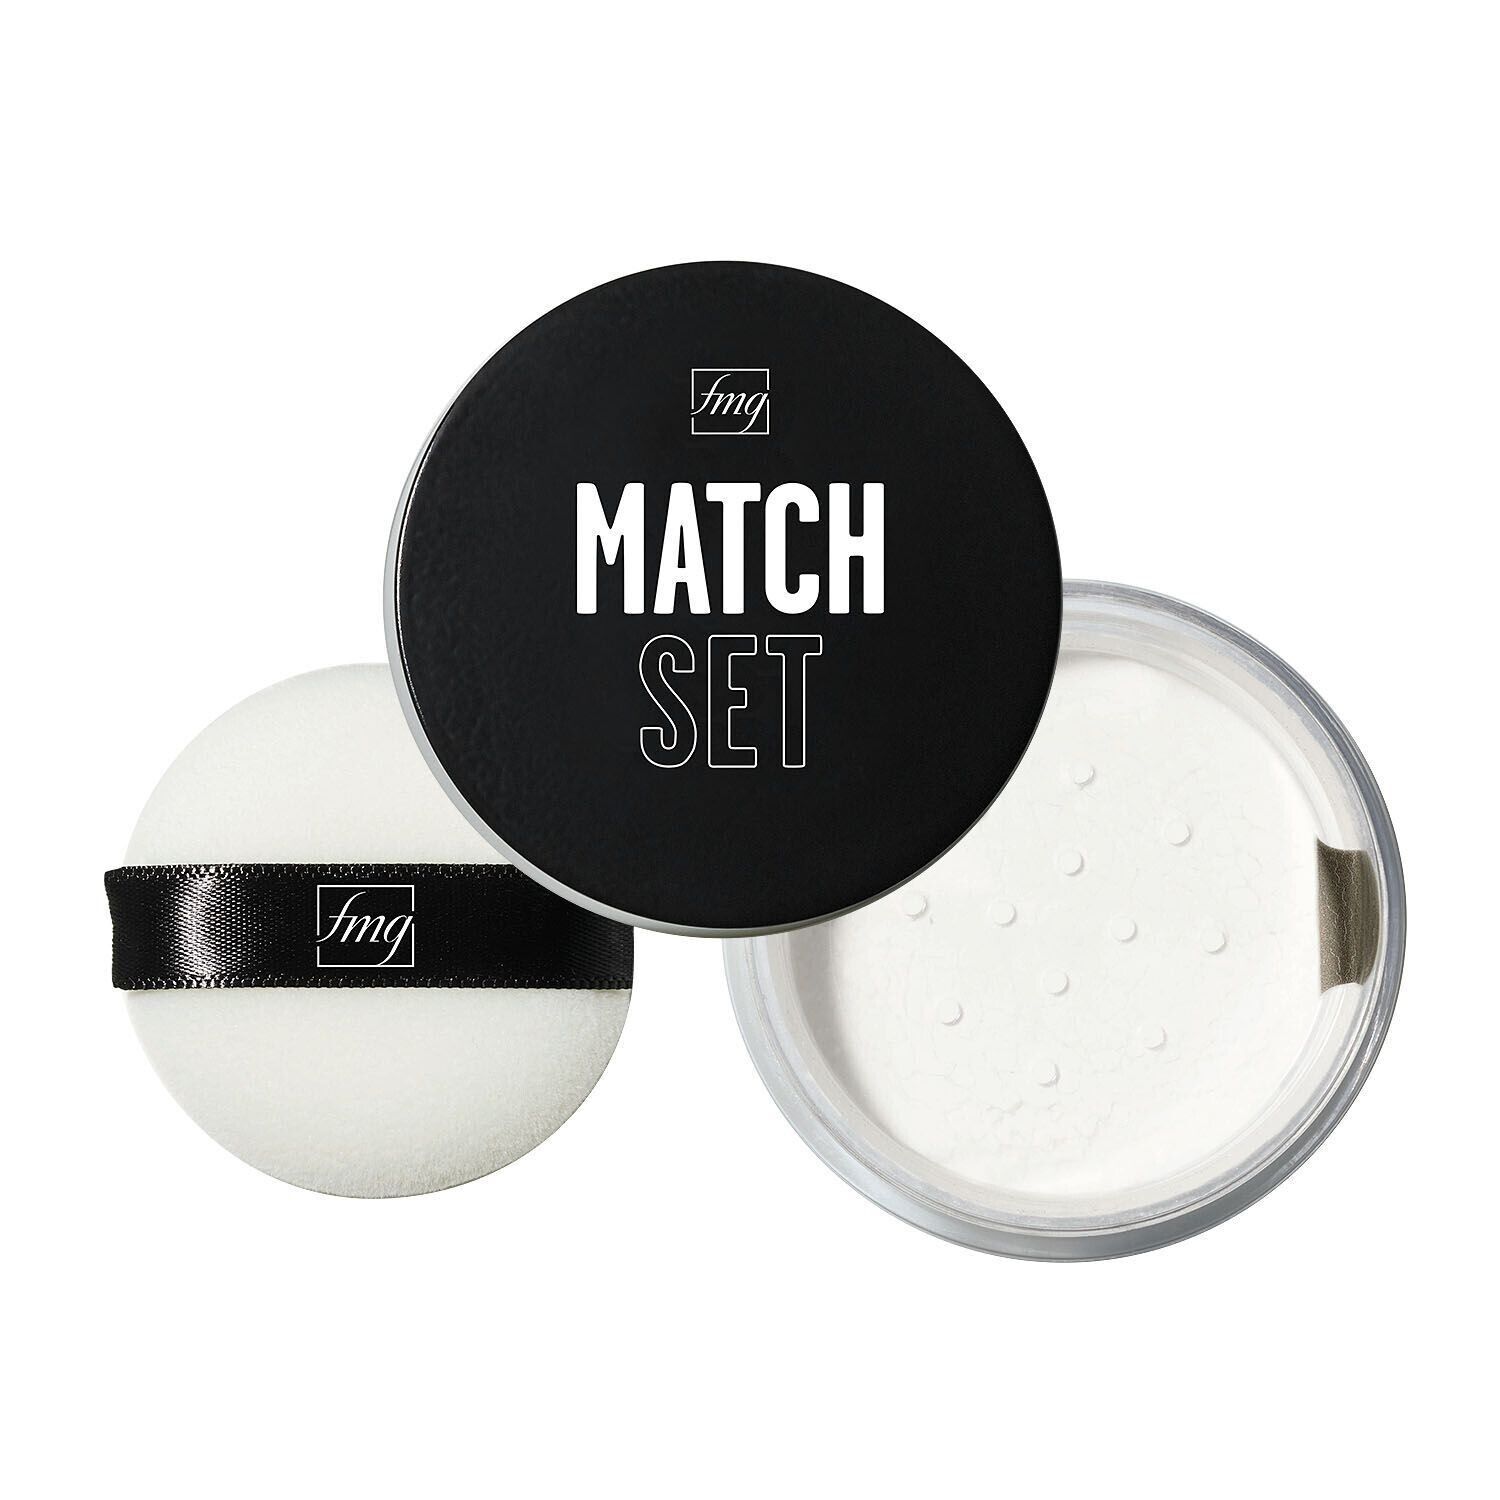 Avon fmg Match Set Finishing Powder (Invisible) Matte finish NEW IN BOX - $13.99